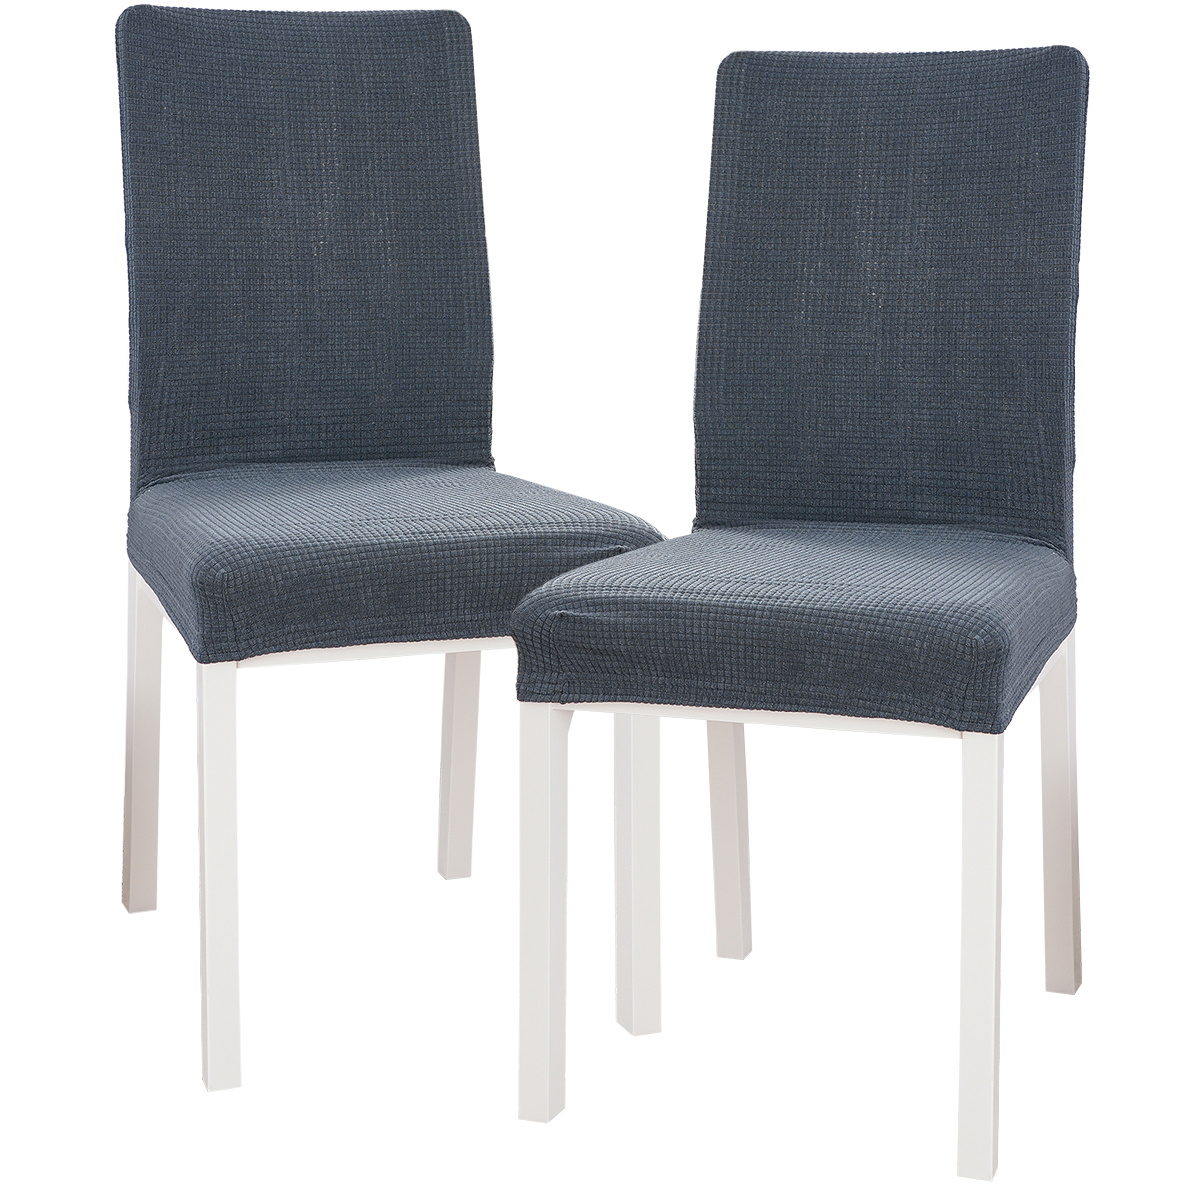 4Home Napínací potah na židli Magic clean tmavě šedá, 45 - 50 cm, sada 2 ks